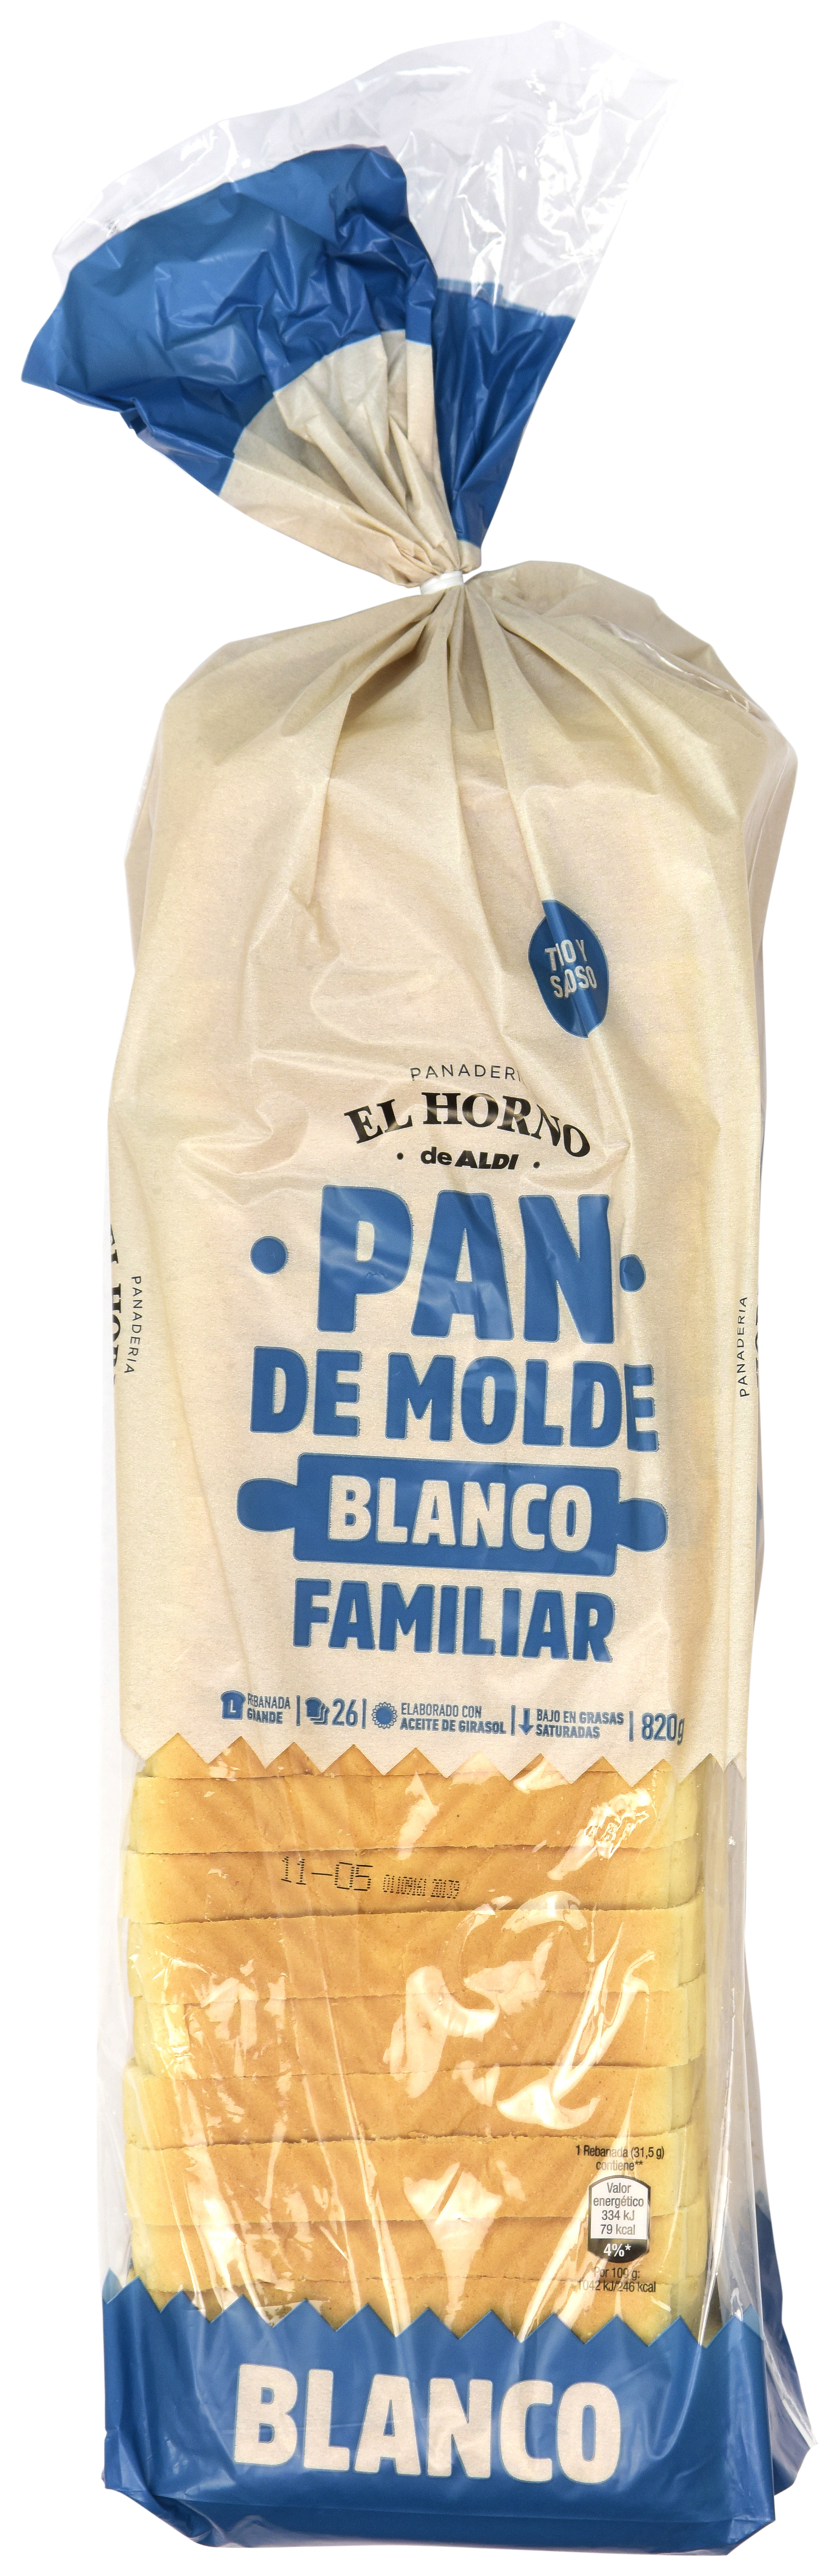 PAN DE MOLDE BLANCO